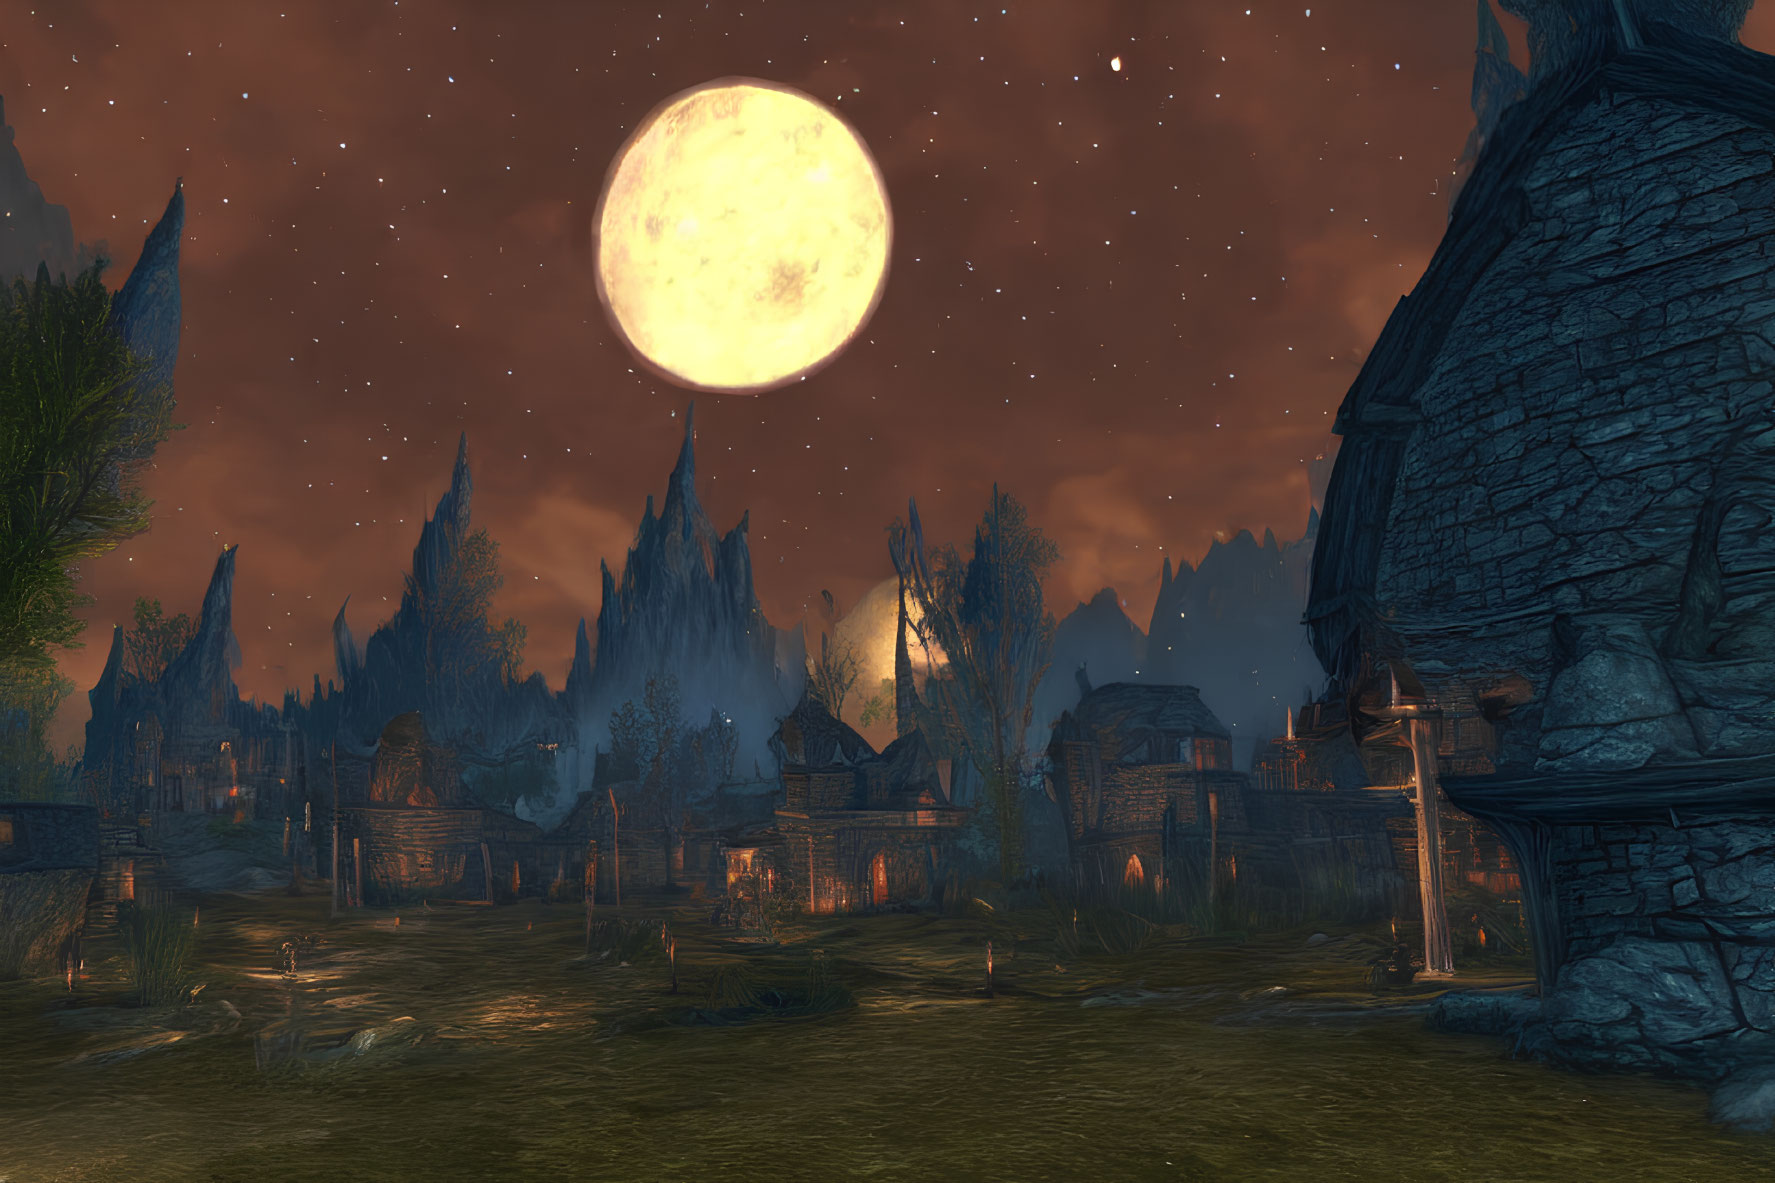 Fantasy village at night under full moon, mountains, starry sky